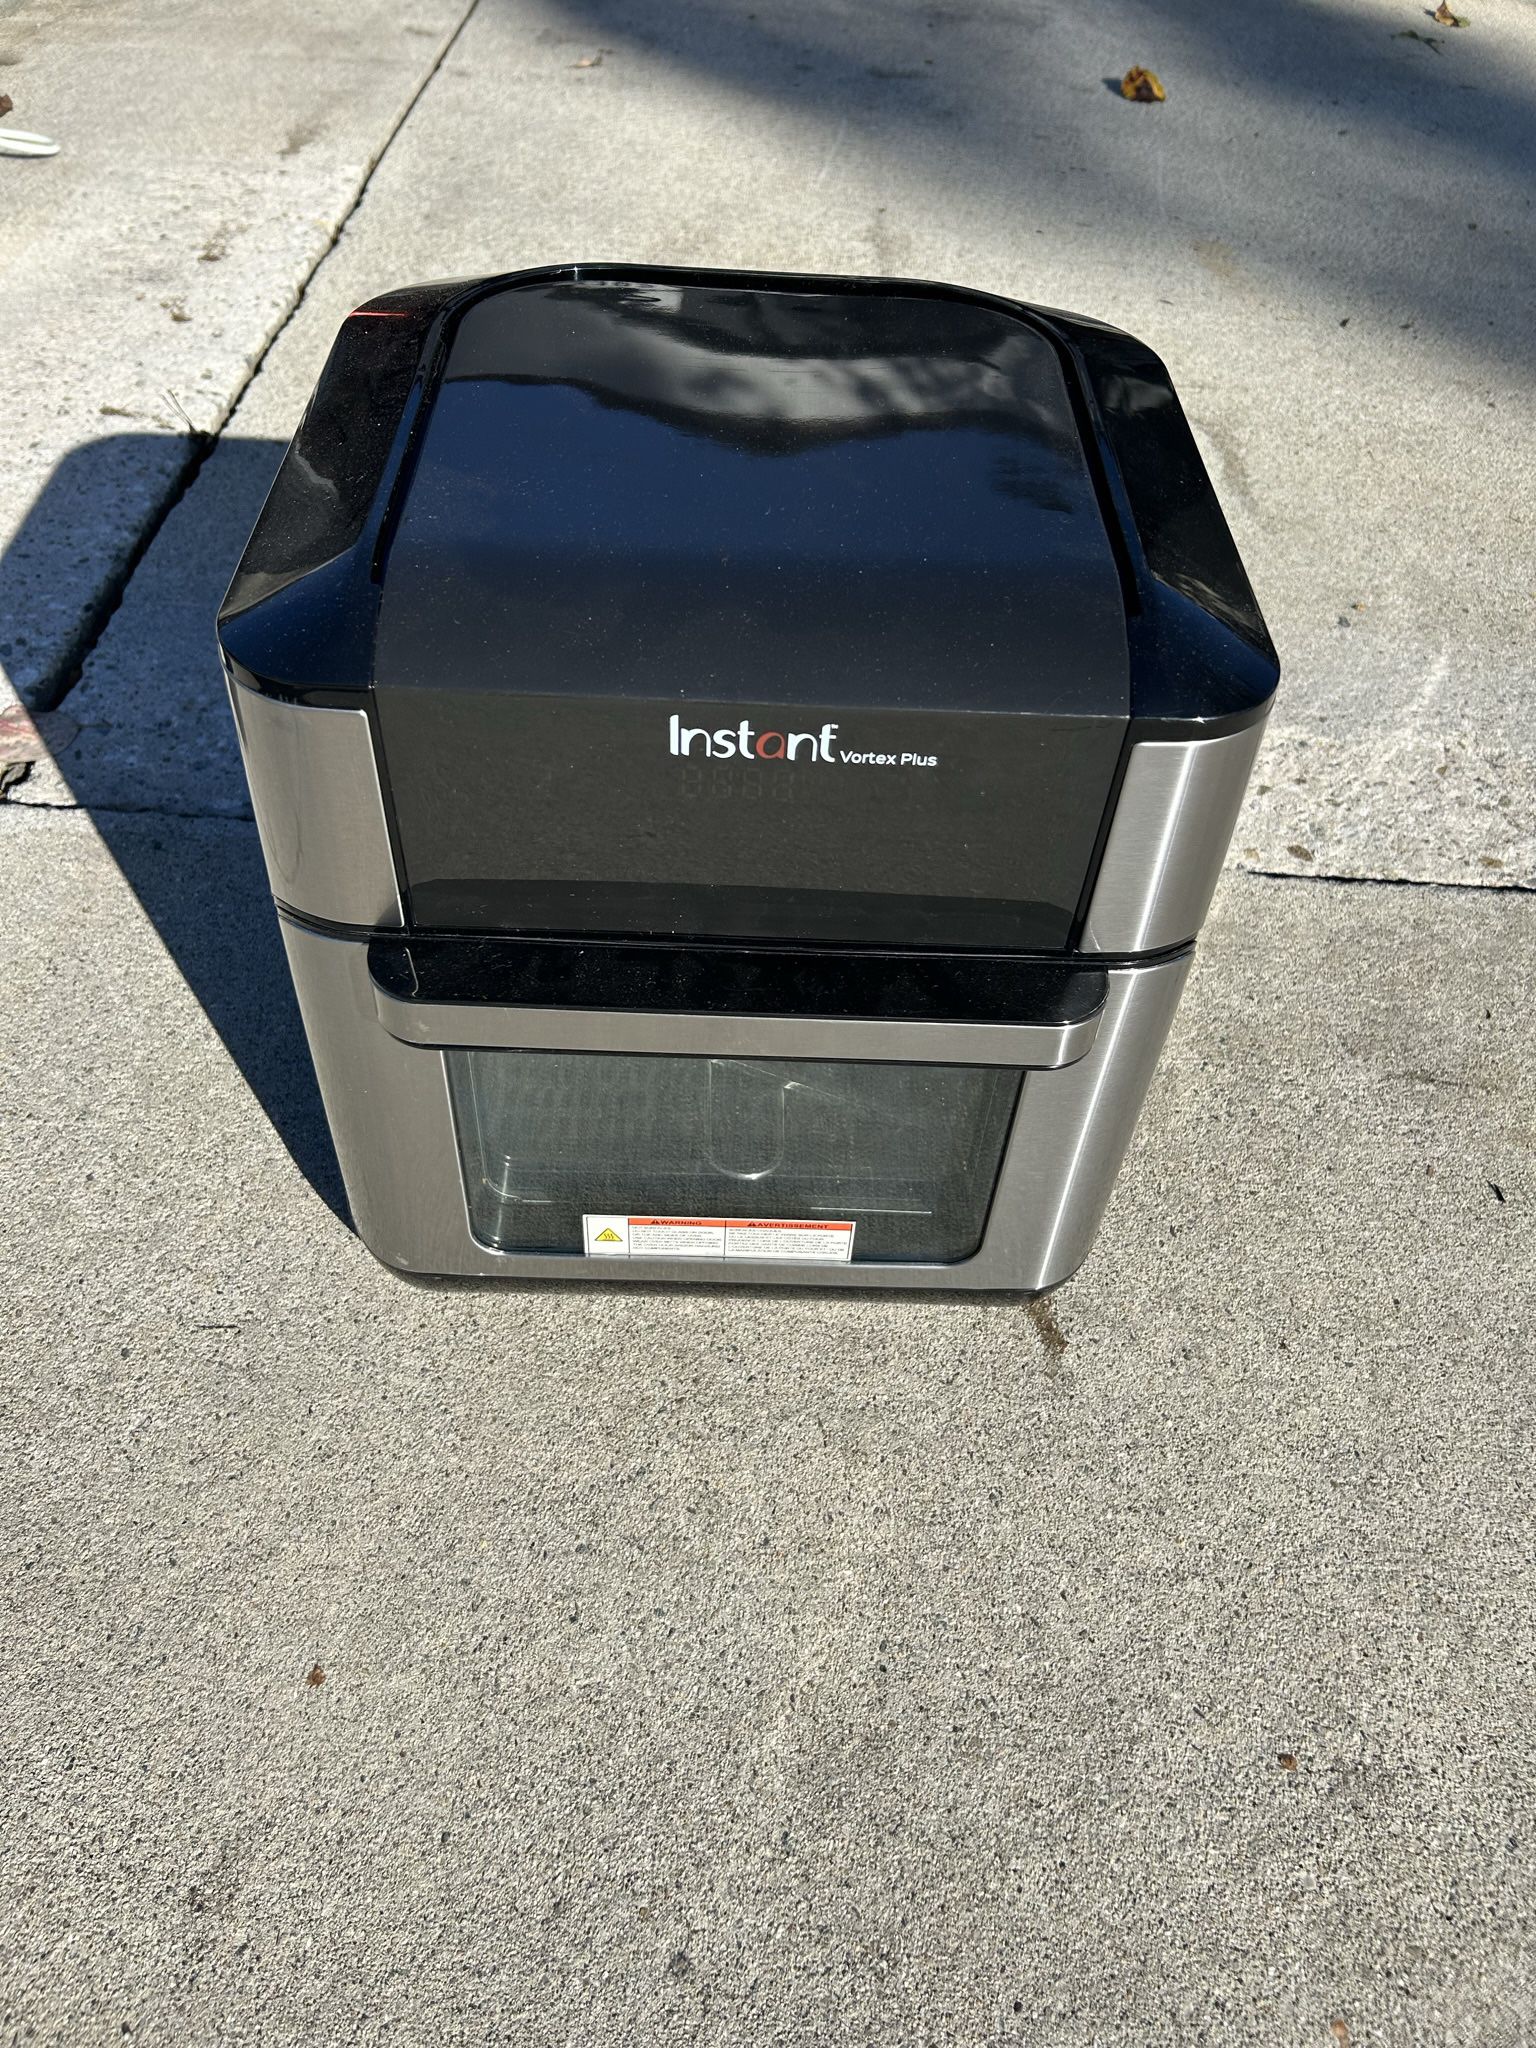 Instant Pot Vortex Plus 10 Quart Air Fryer Oven